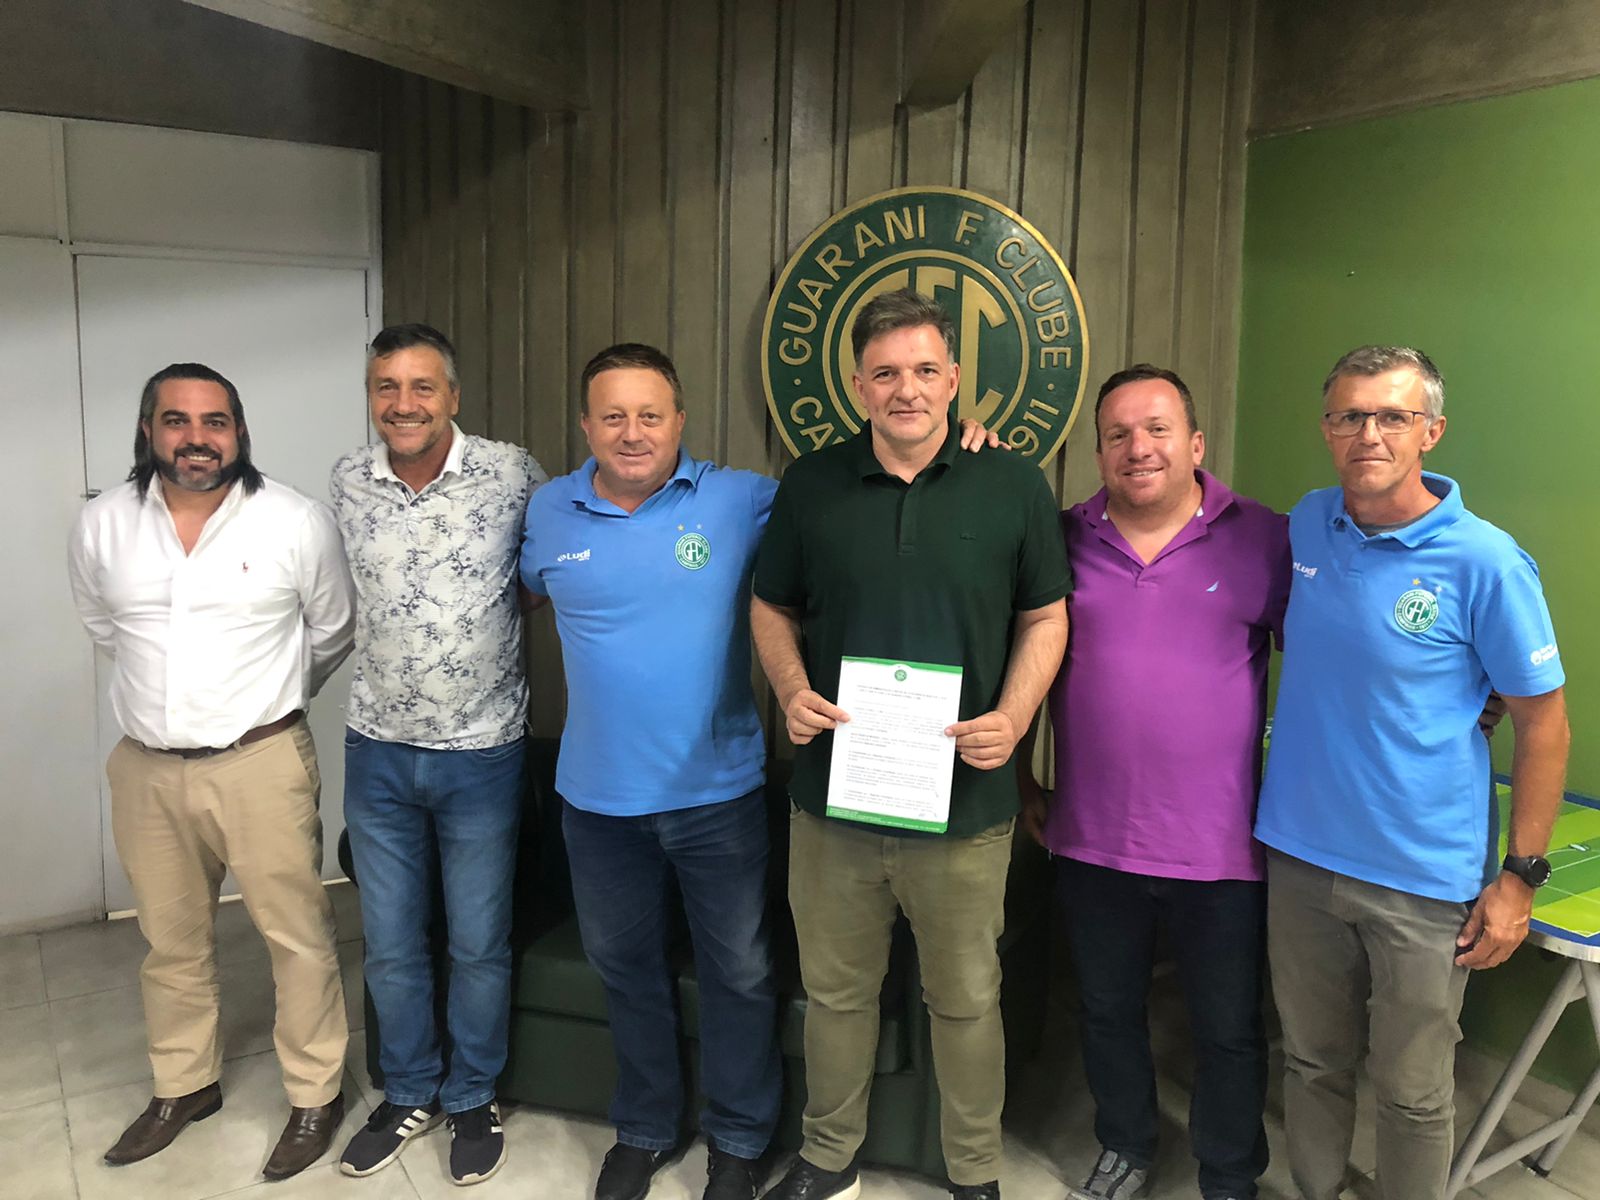 Guarani renova parceria com o BOB'S - Guarani Futebol Clube